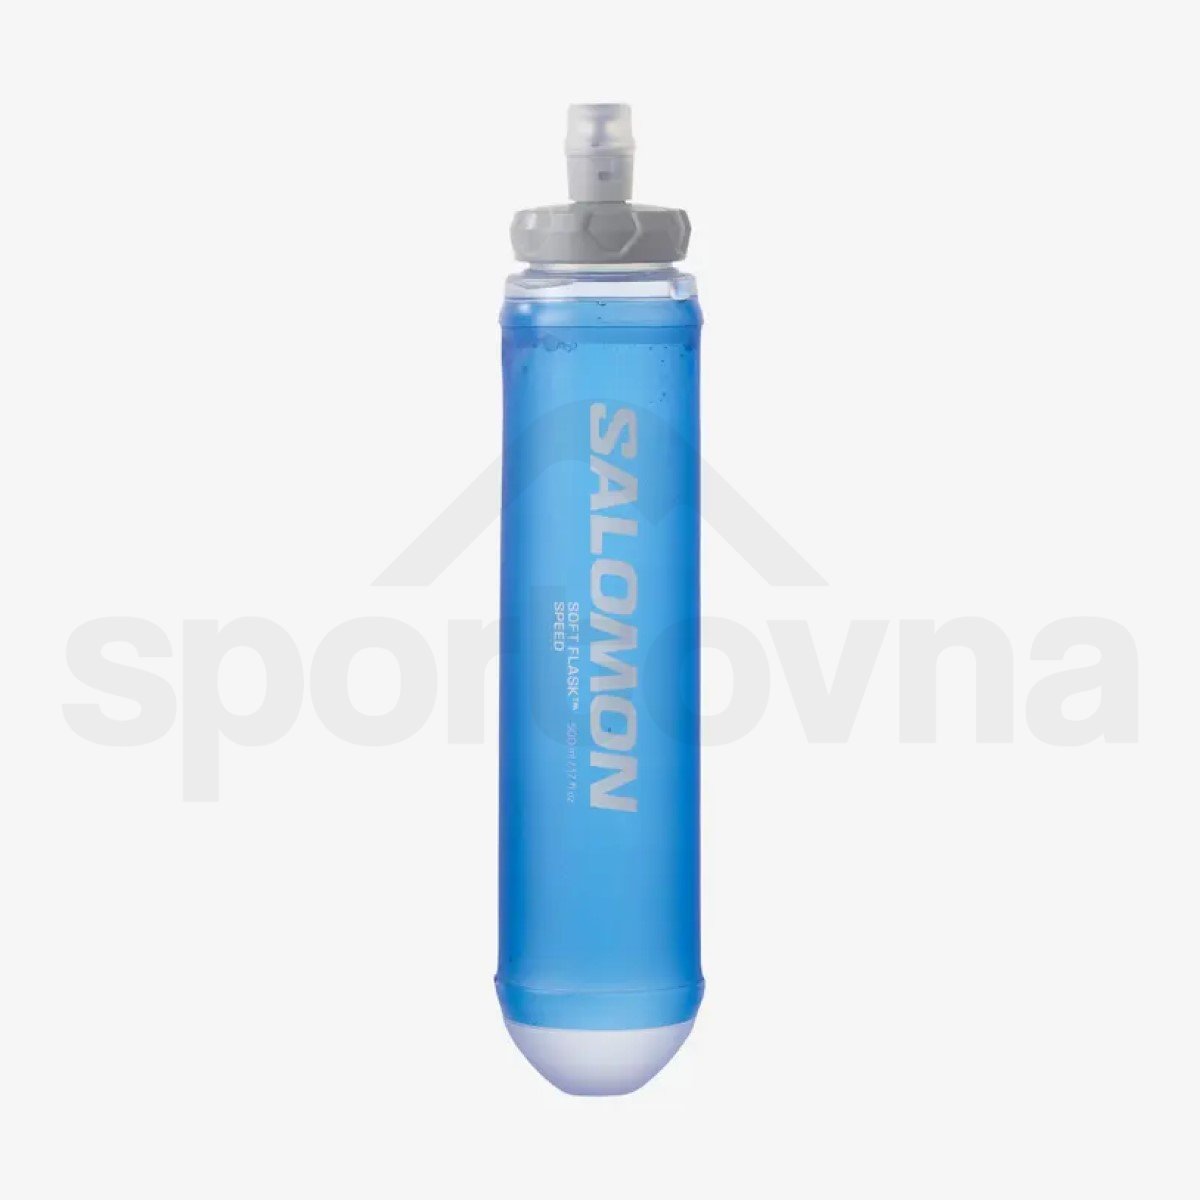 Batoh Salomon Sense Pro 5 Ltd Edition with flasks - černá/bílá